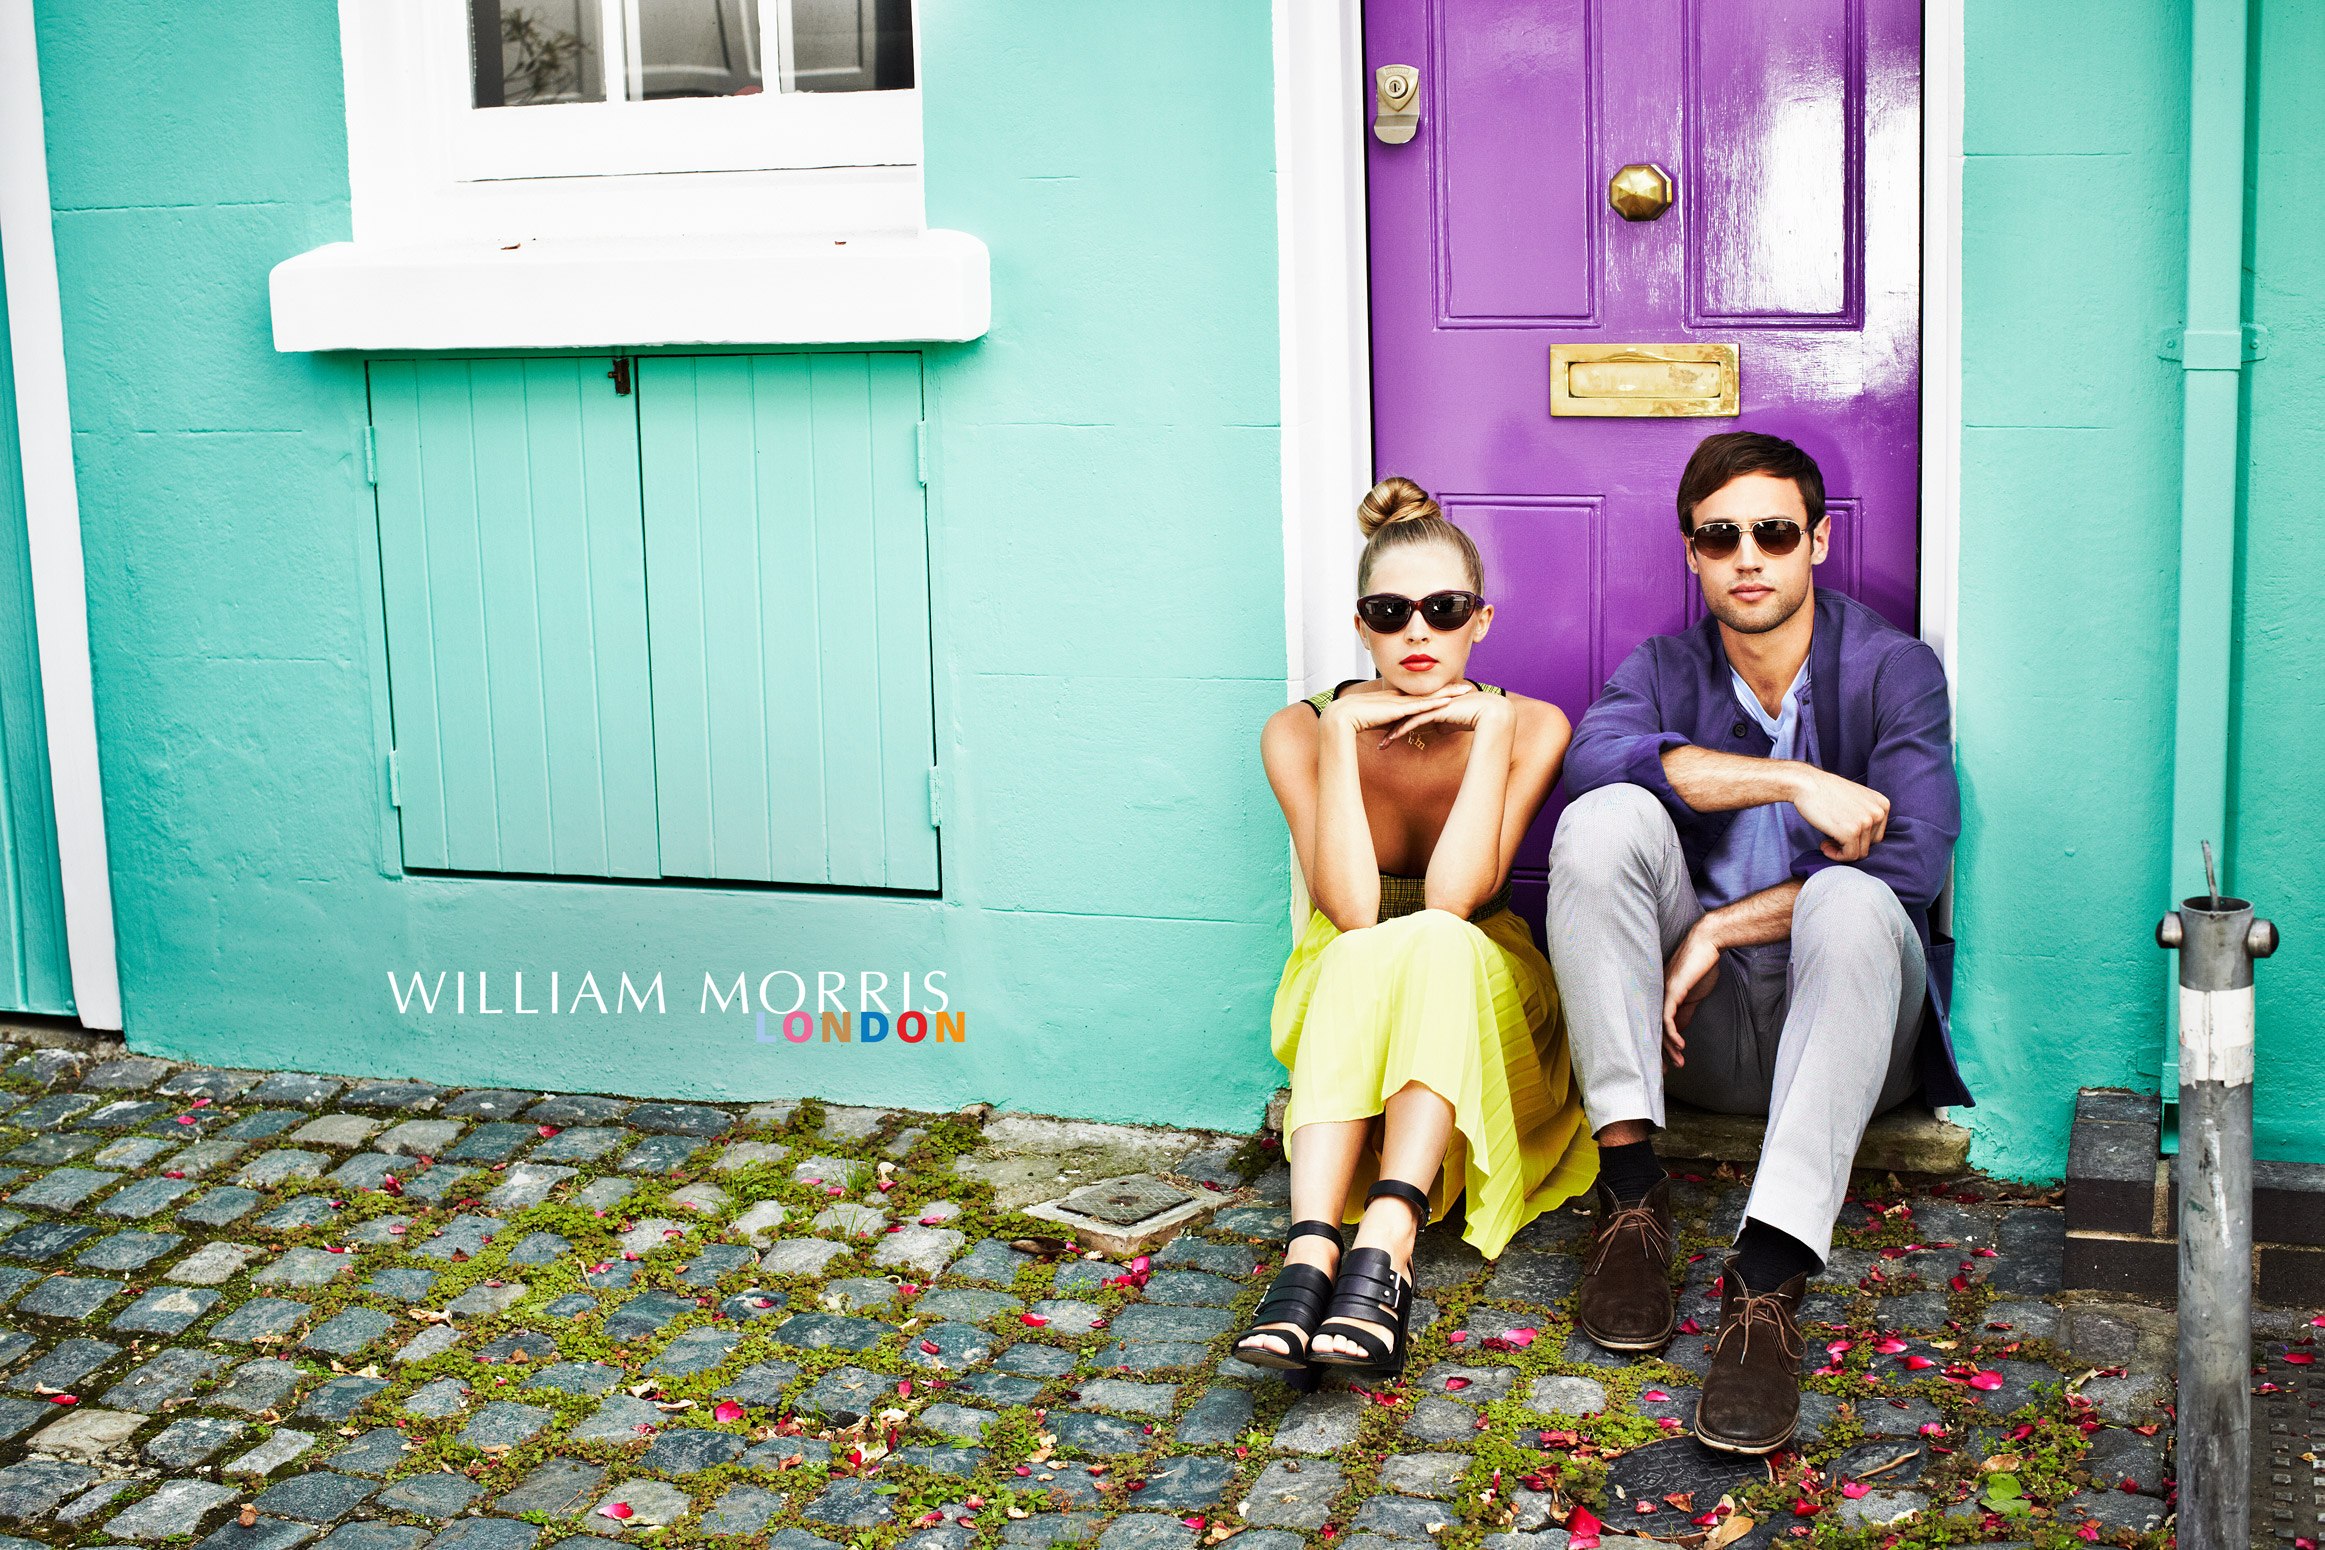 william-morris-ruth-rose-fashion-glasses-accessories-london-hermione-corfield-london-tourist-notting-hill-chelsea-fashion-boy-girl-colour-house-51.jpg